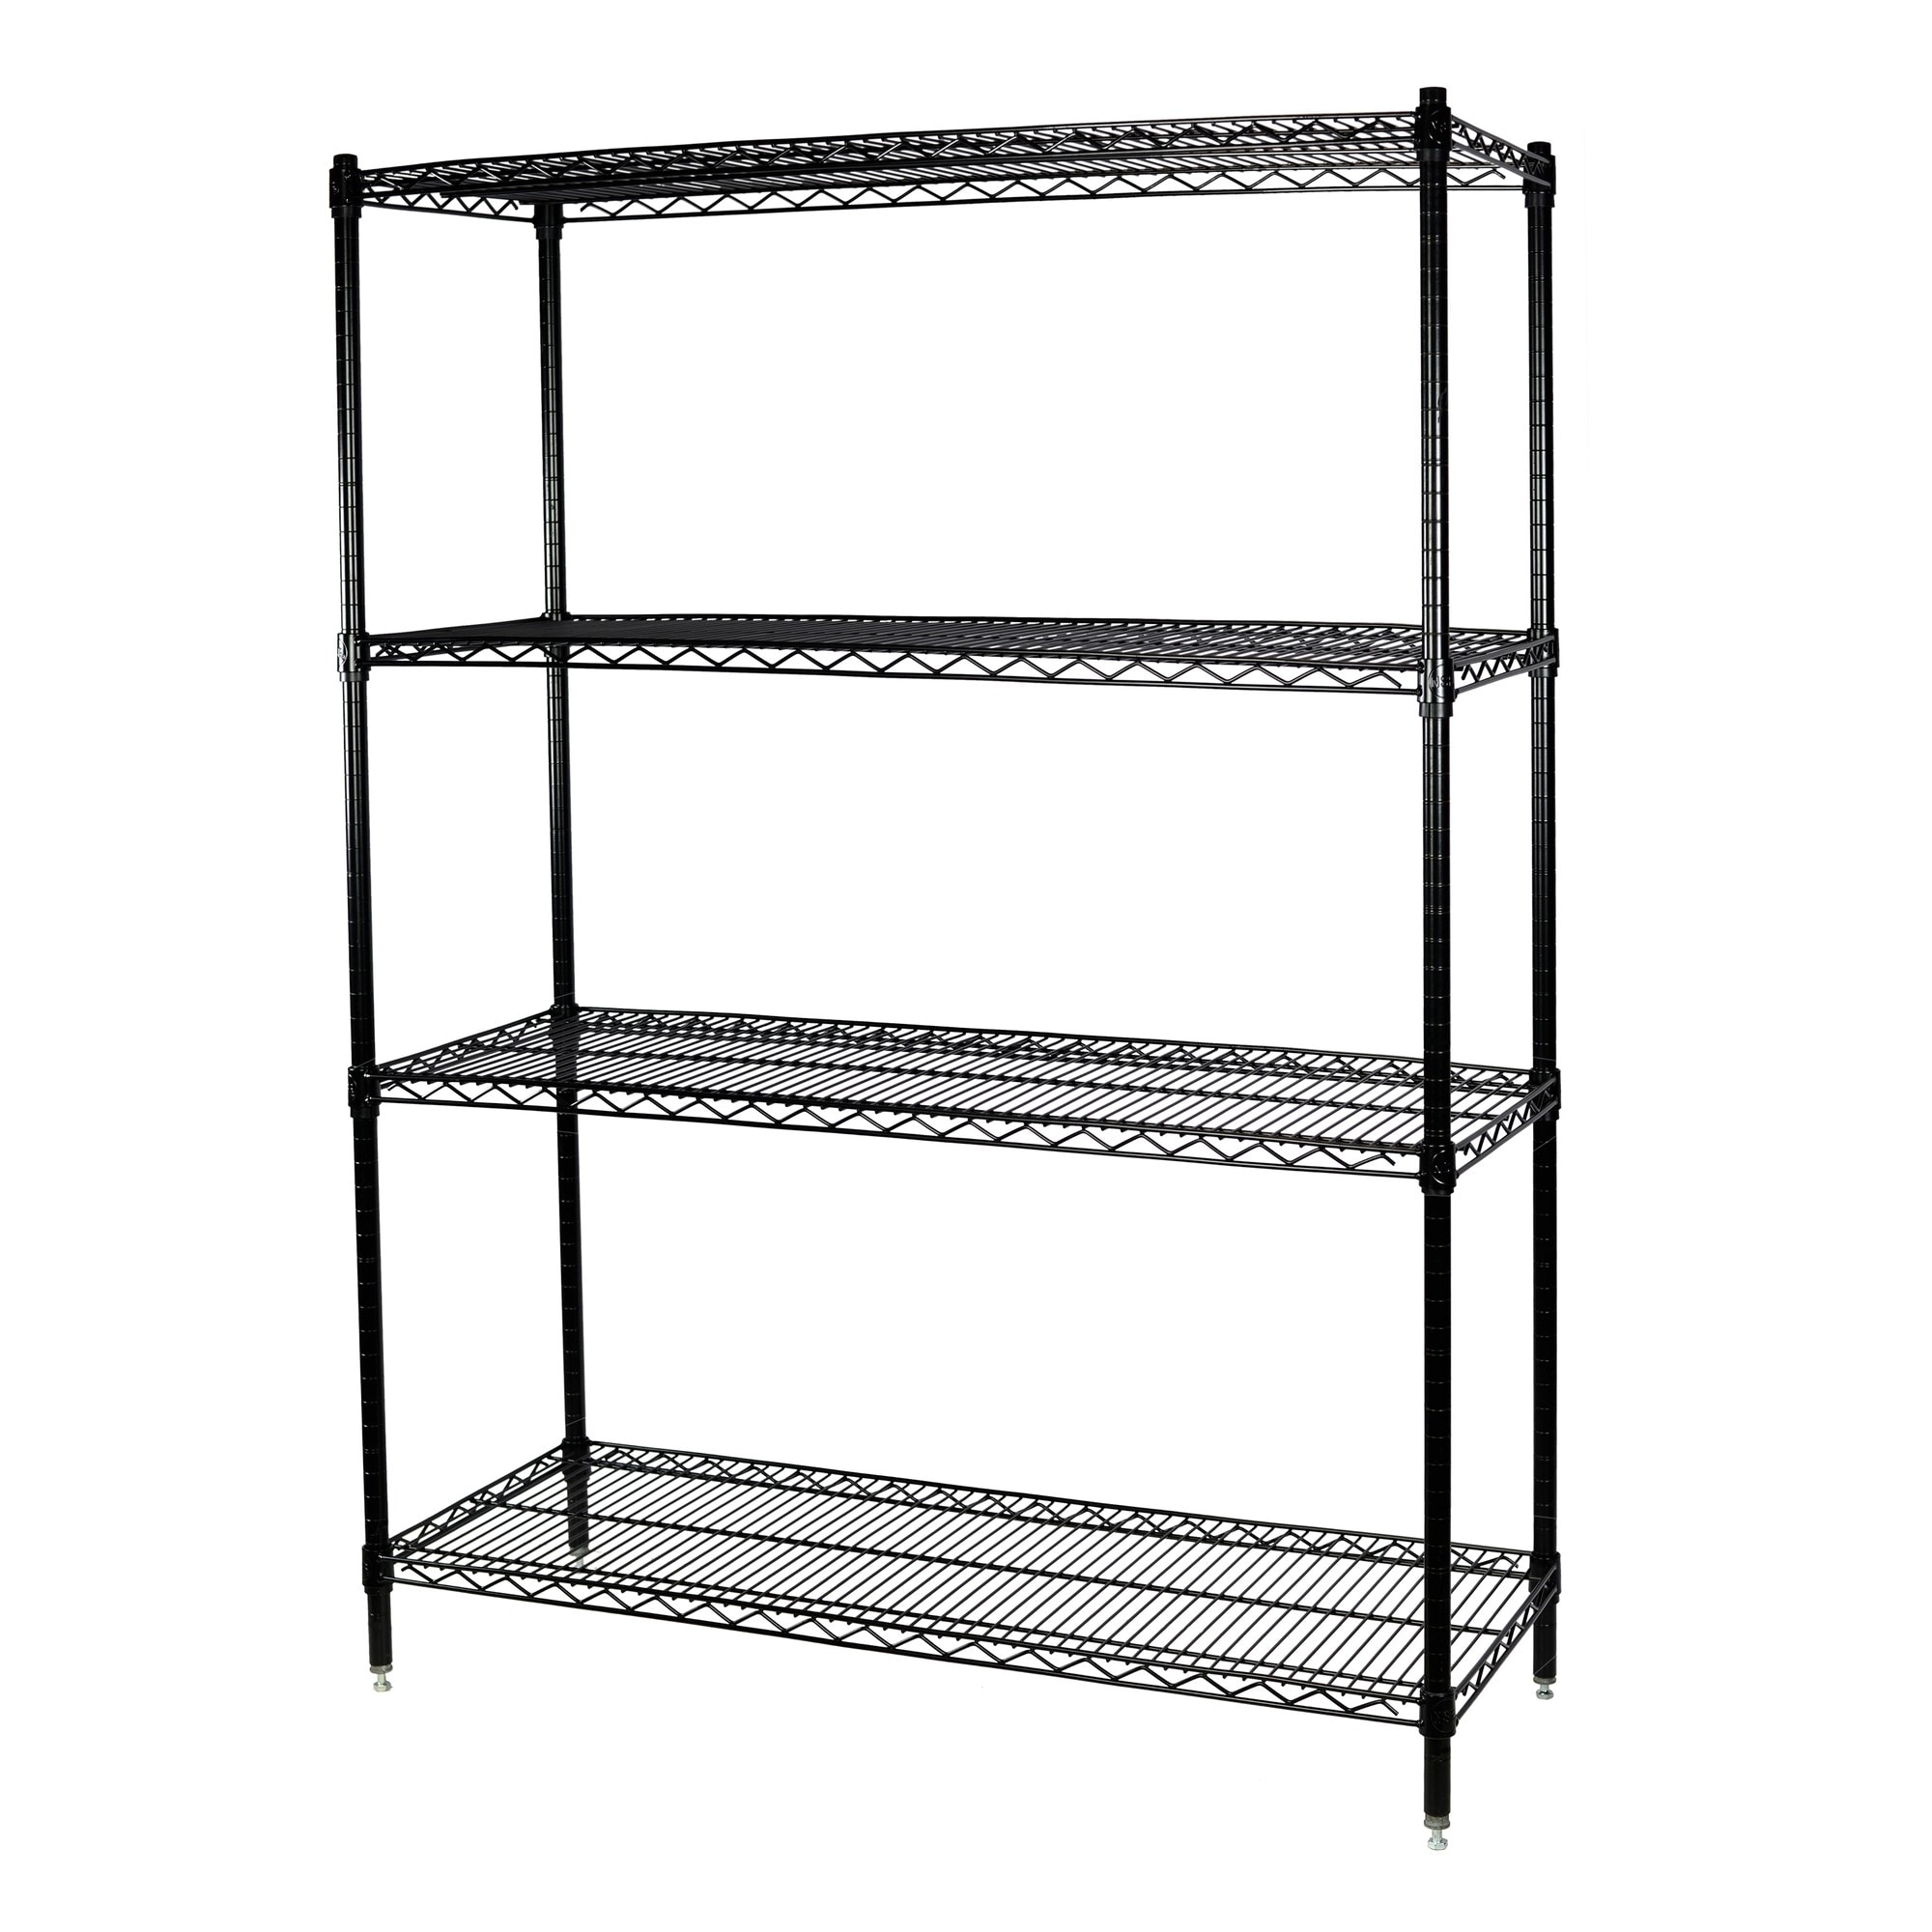 4/5 Tier Storage Rack Organizer Kitchen Shelving Steel Wire Shelves Black/Chrome 